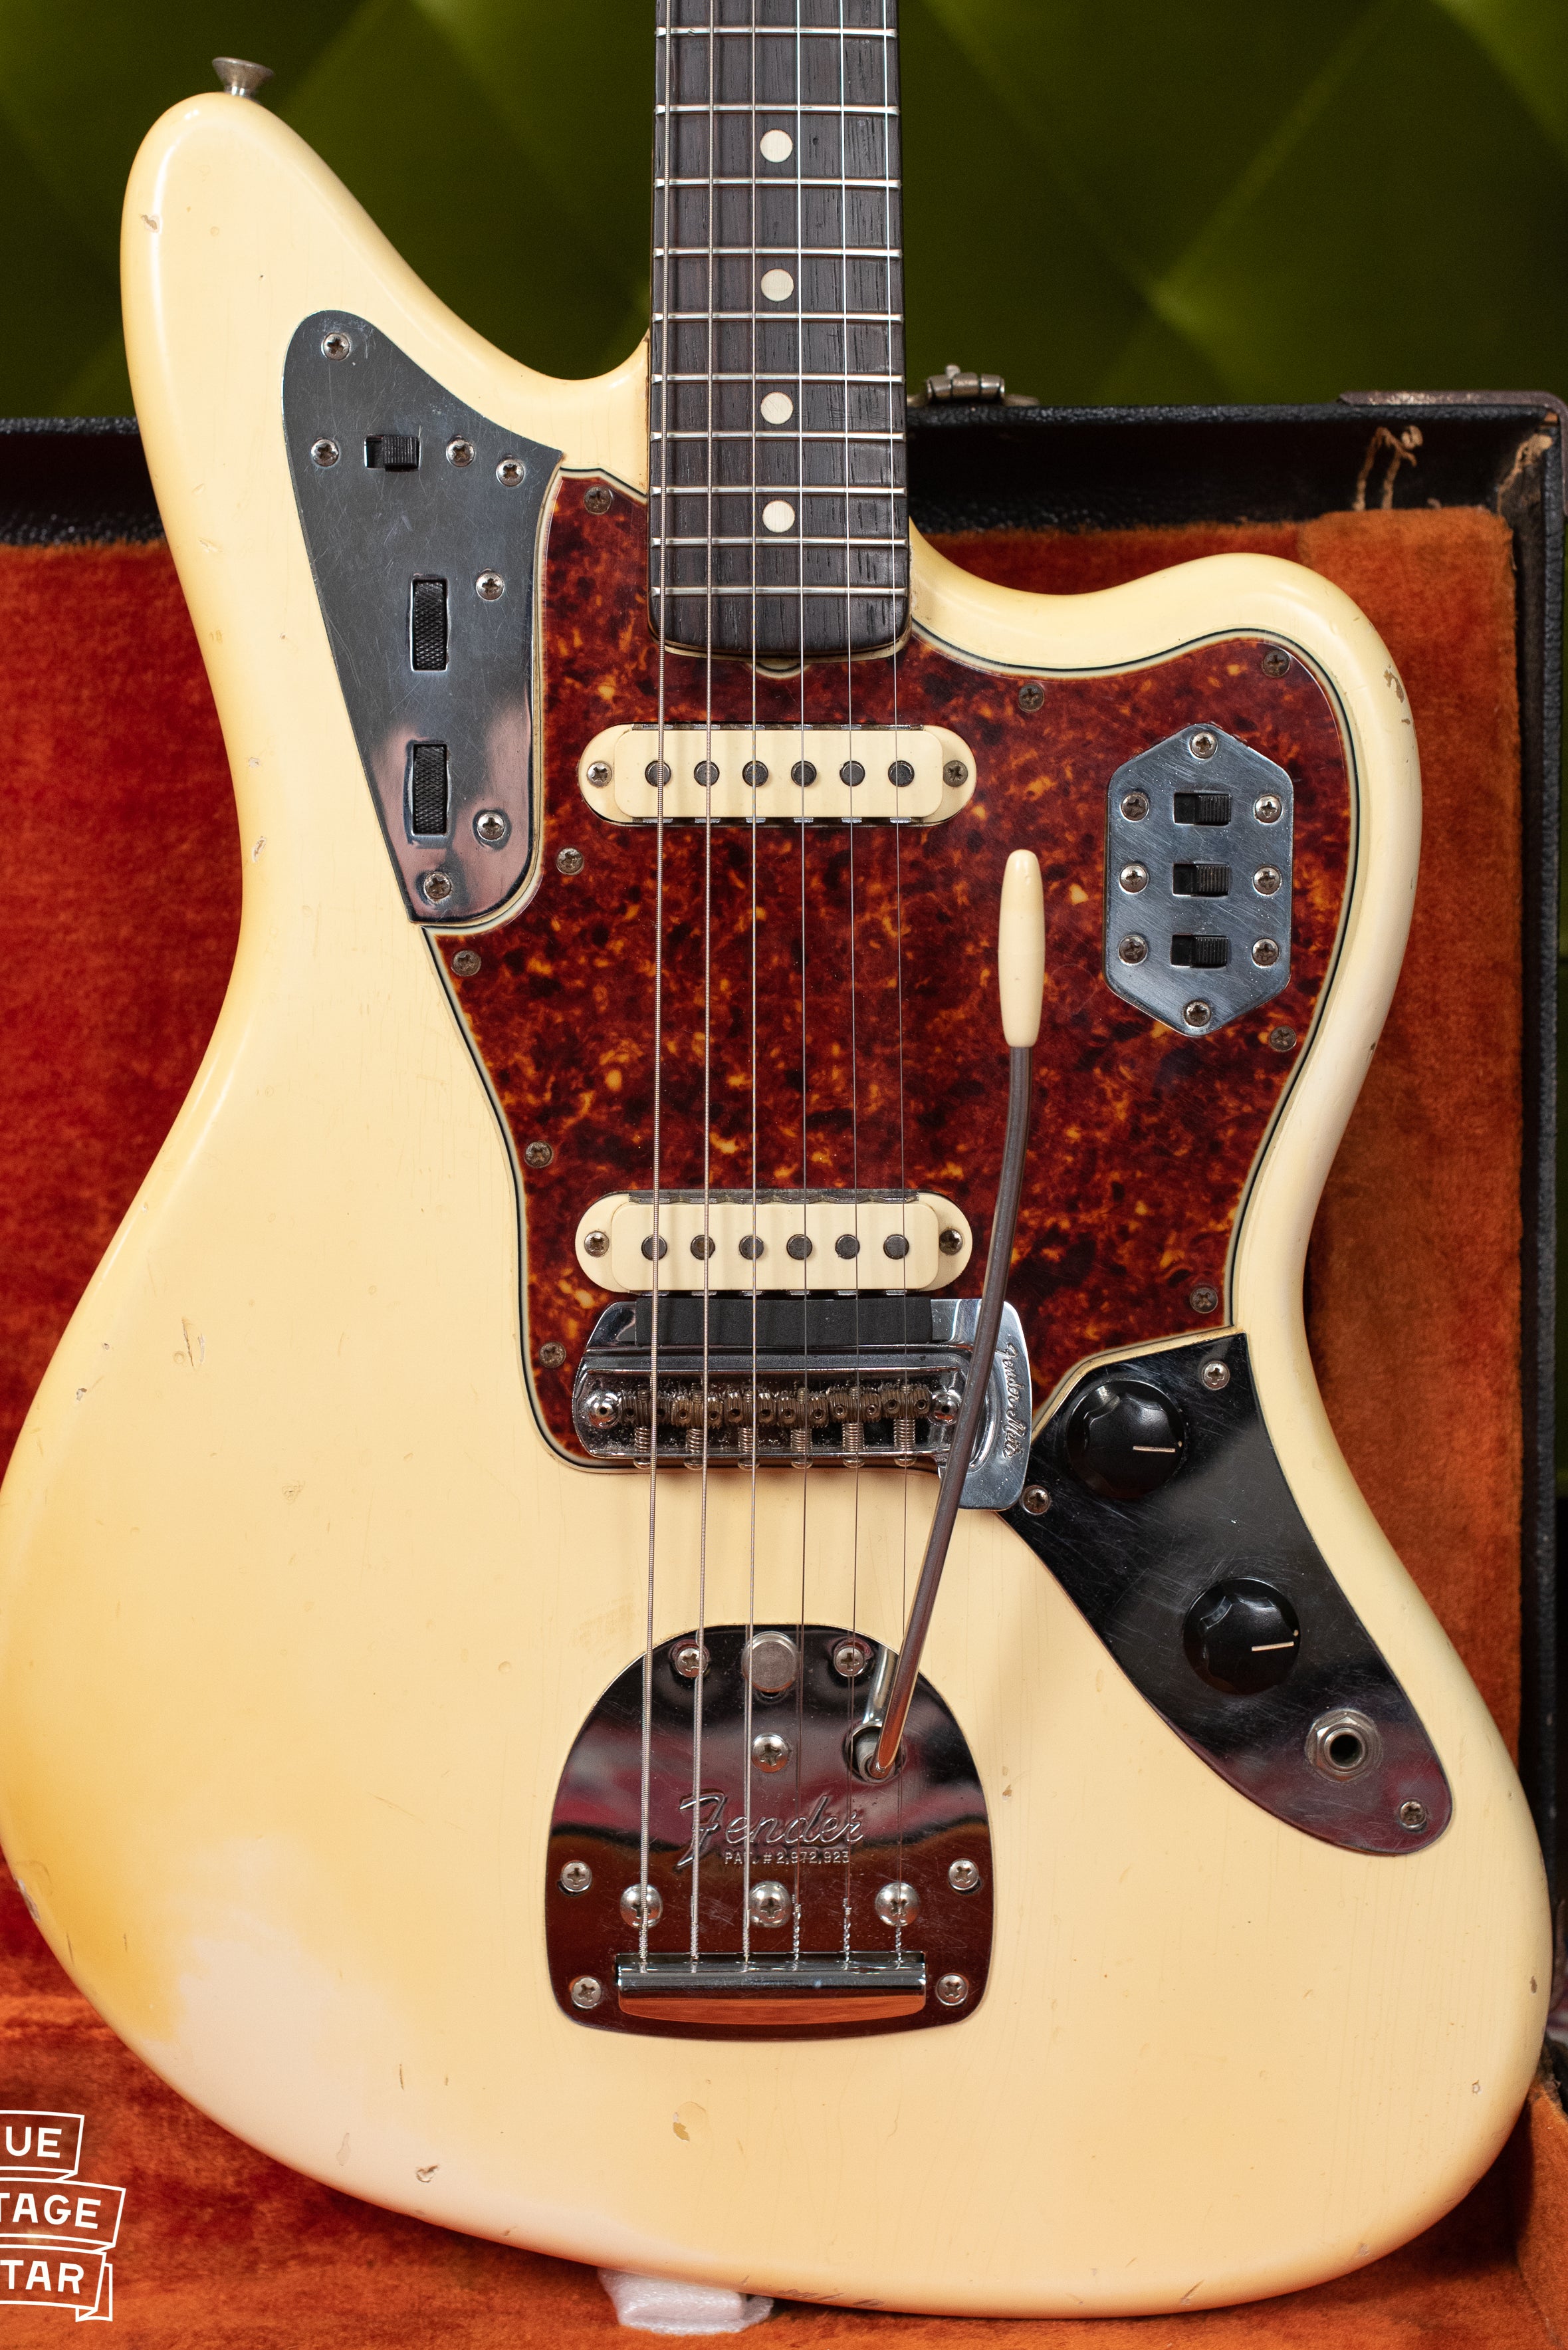 1965 Fender Jaguar Olympic White vintage guitar